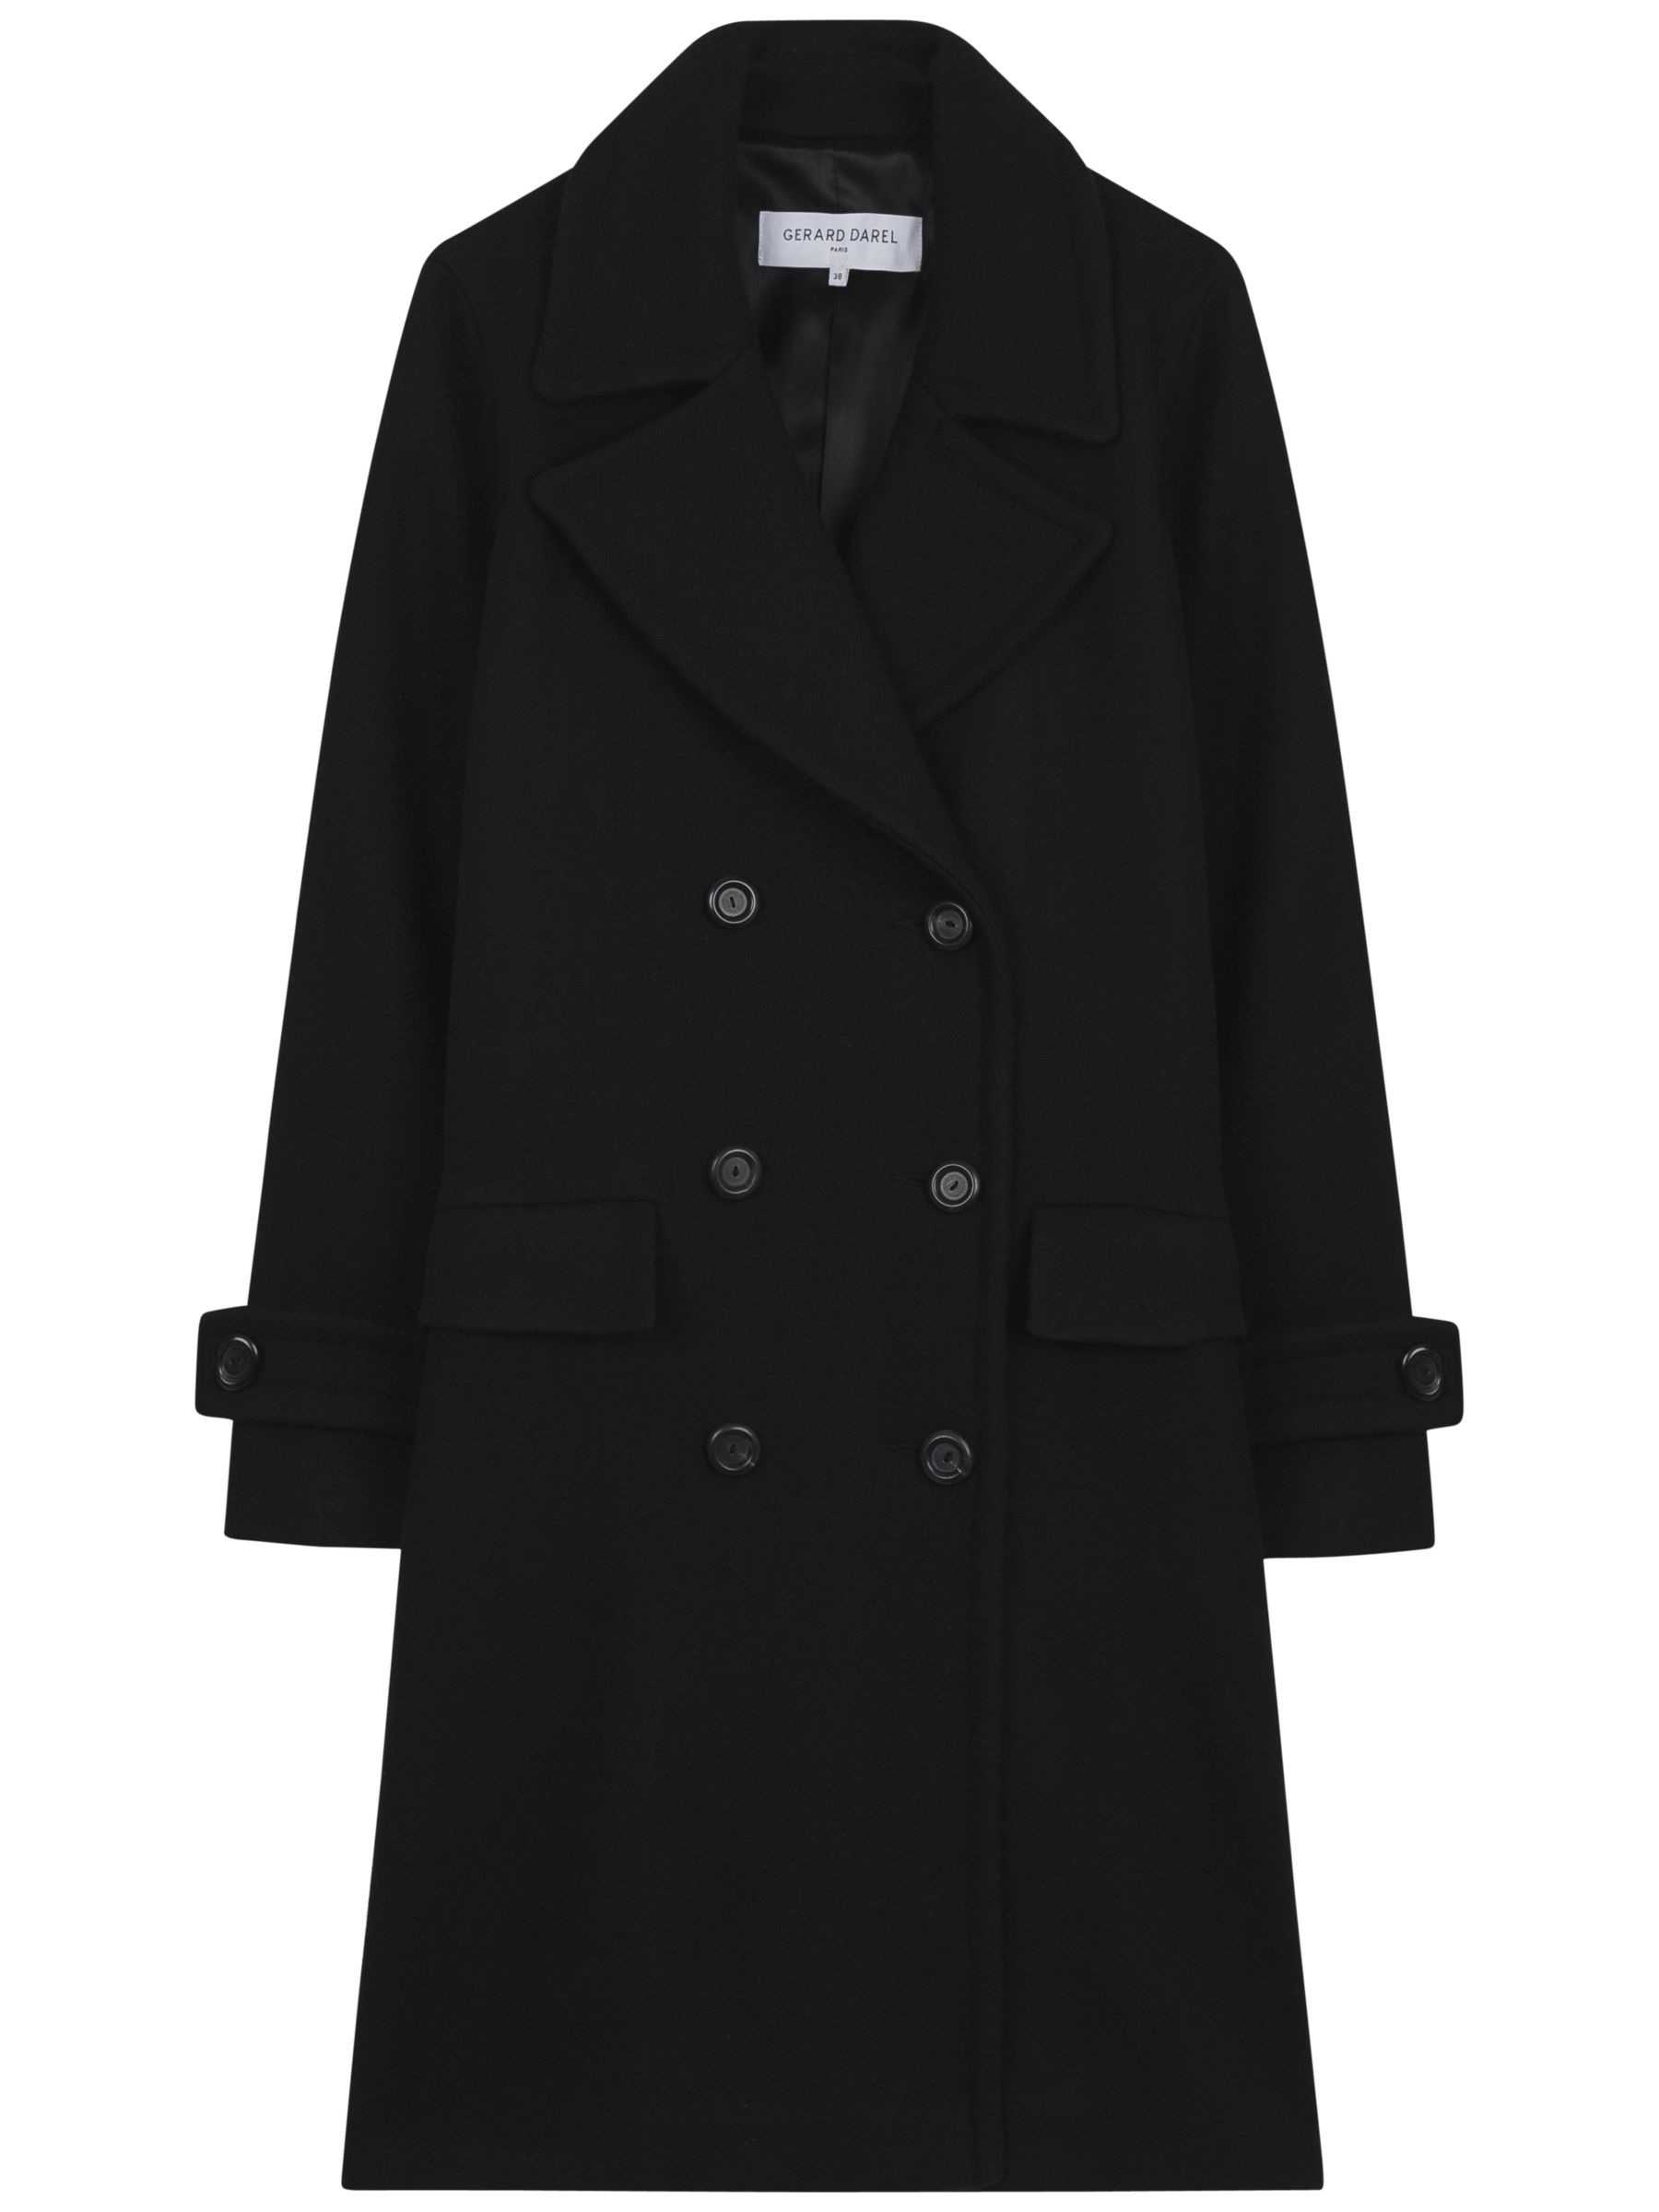 Women's Coats & Jackets | Ladies Coats | John Lewis